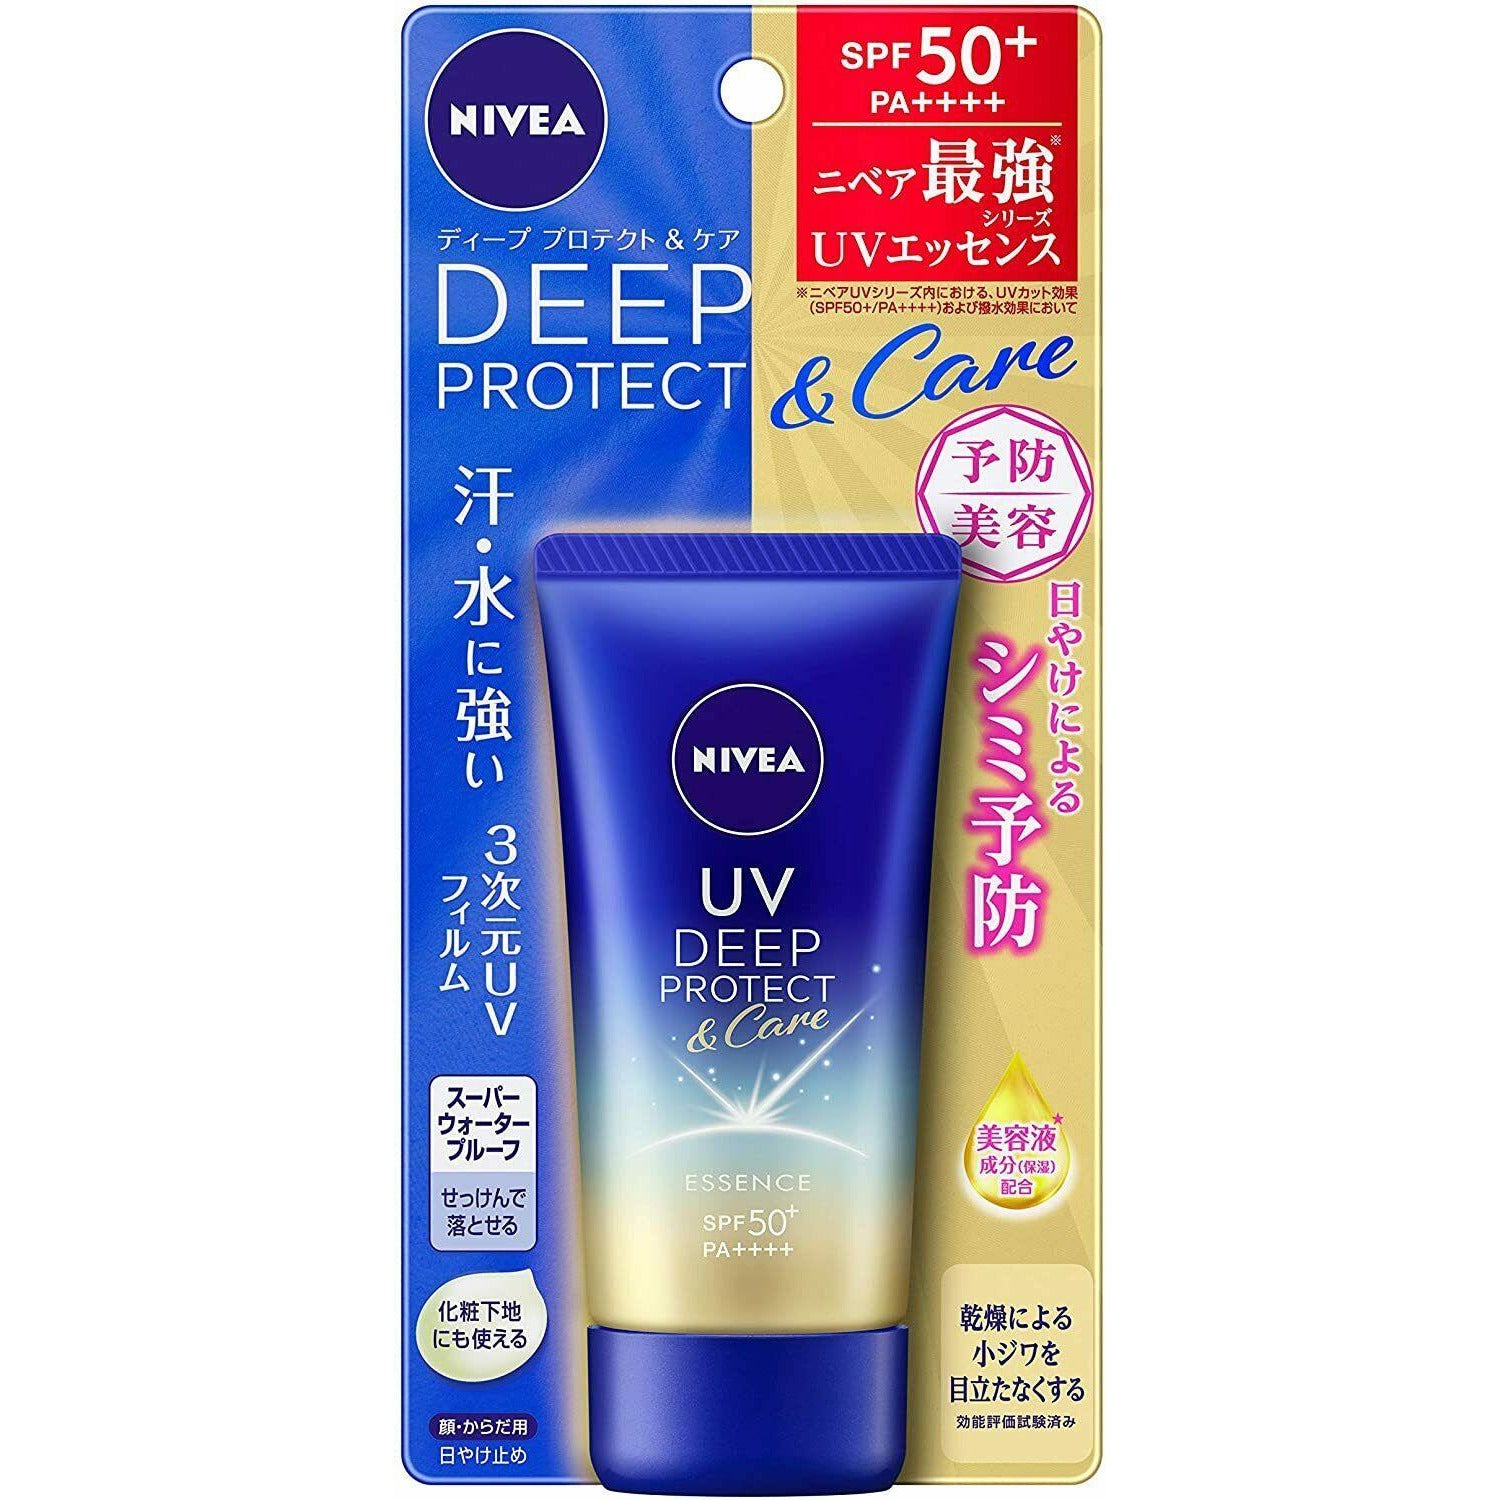 2021 Nivea UV Deep Protect & Care Essence 50g SPF50 + / PA ++++ Japan